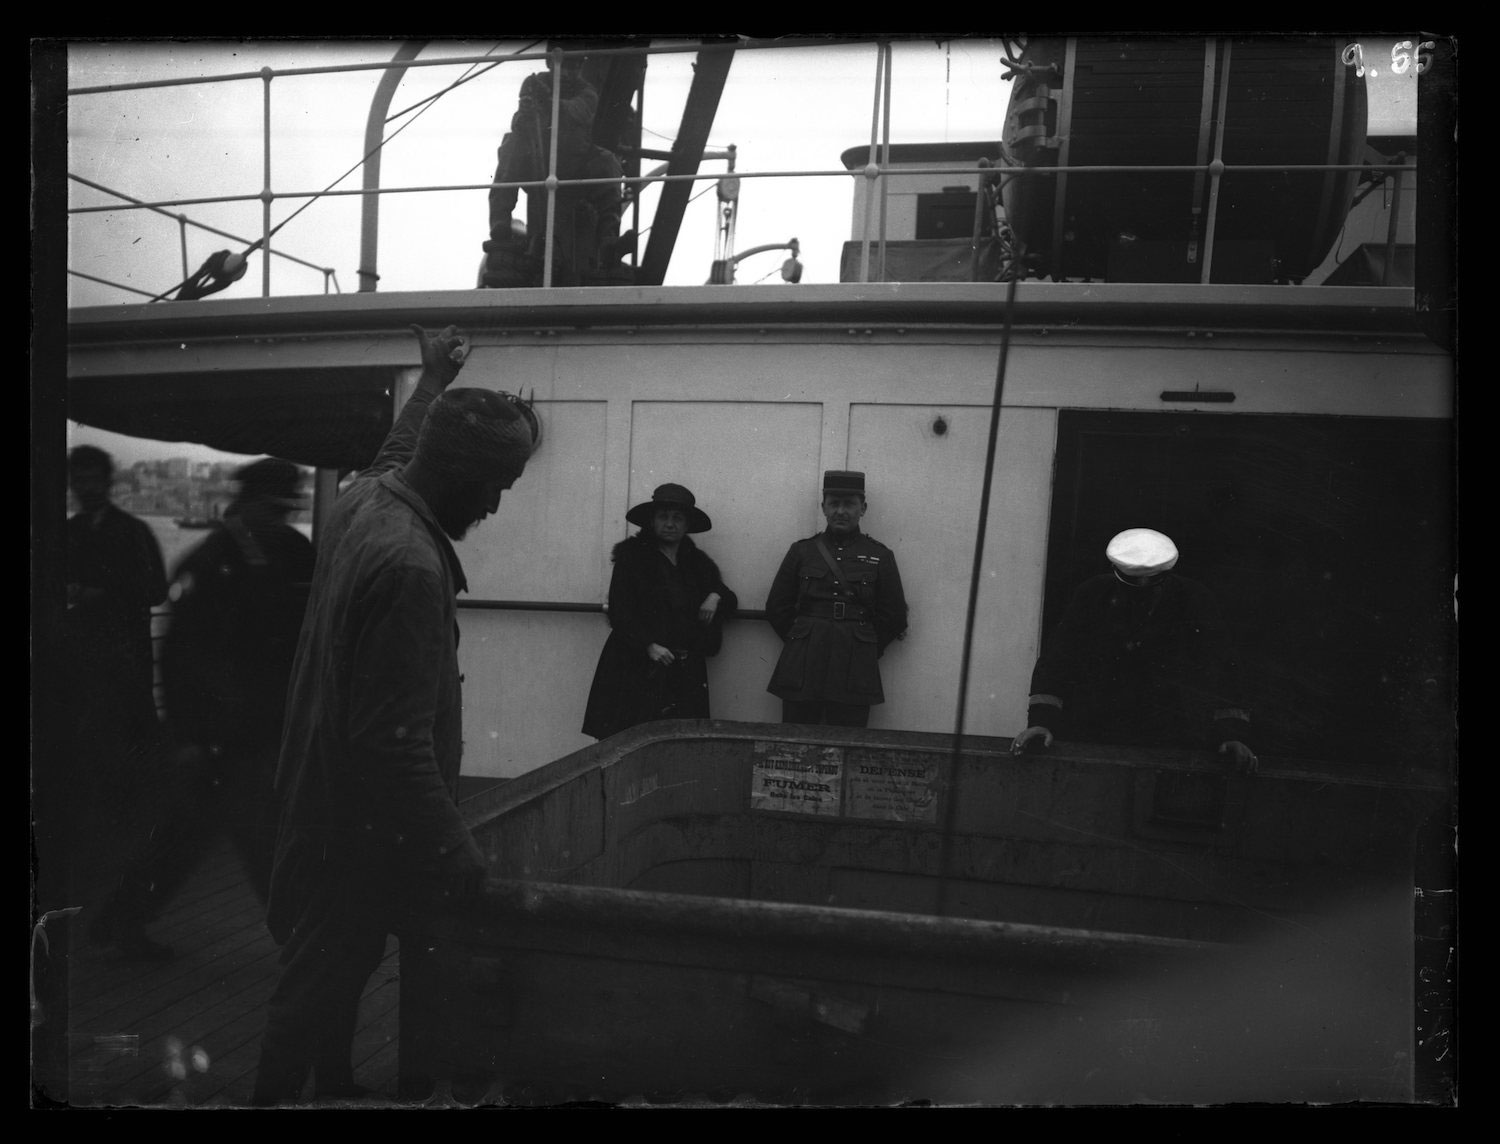 Portrait of passengers on deck of ship